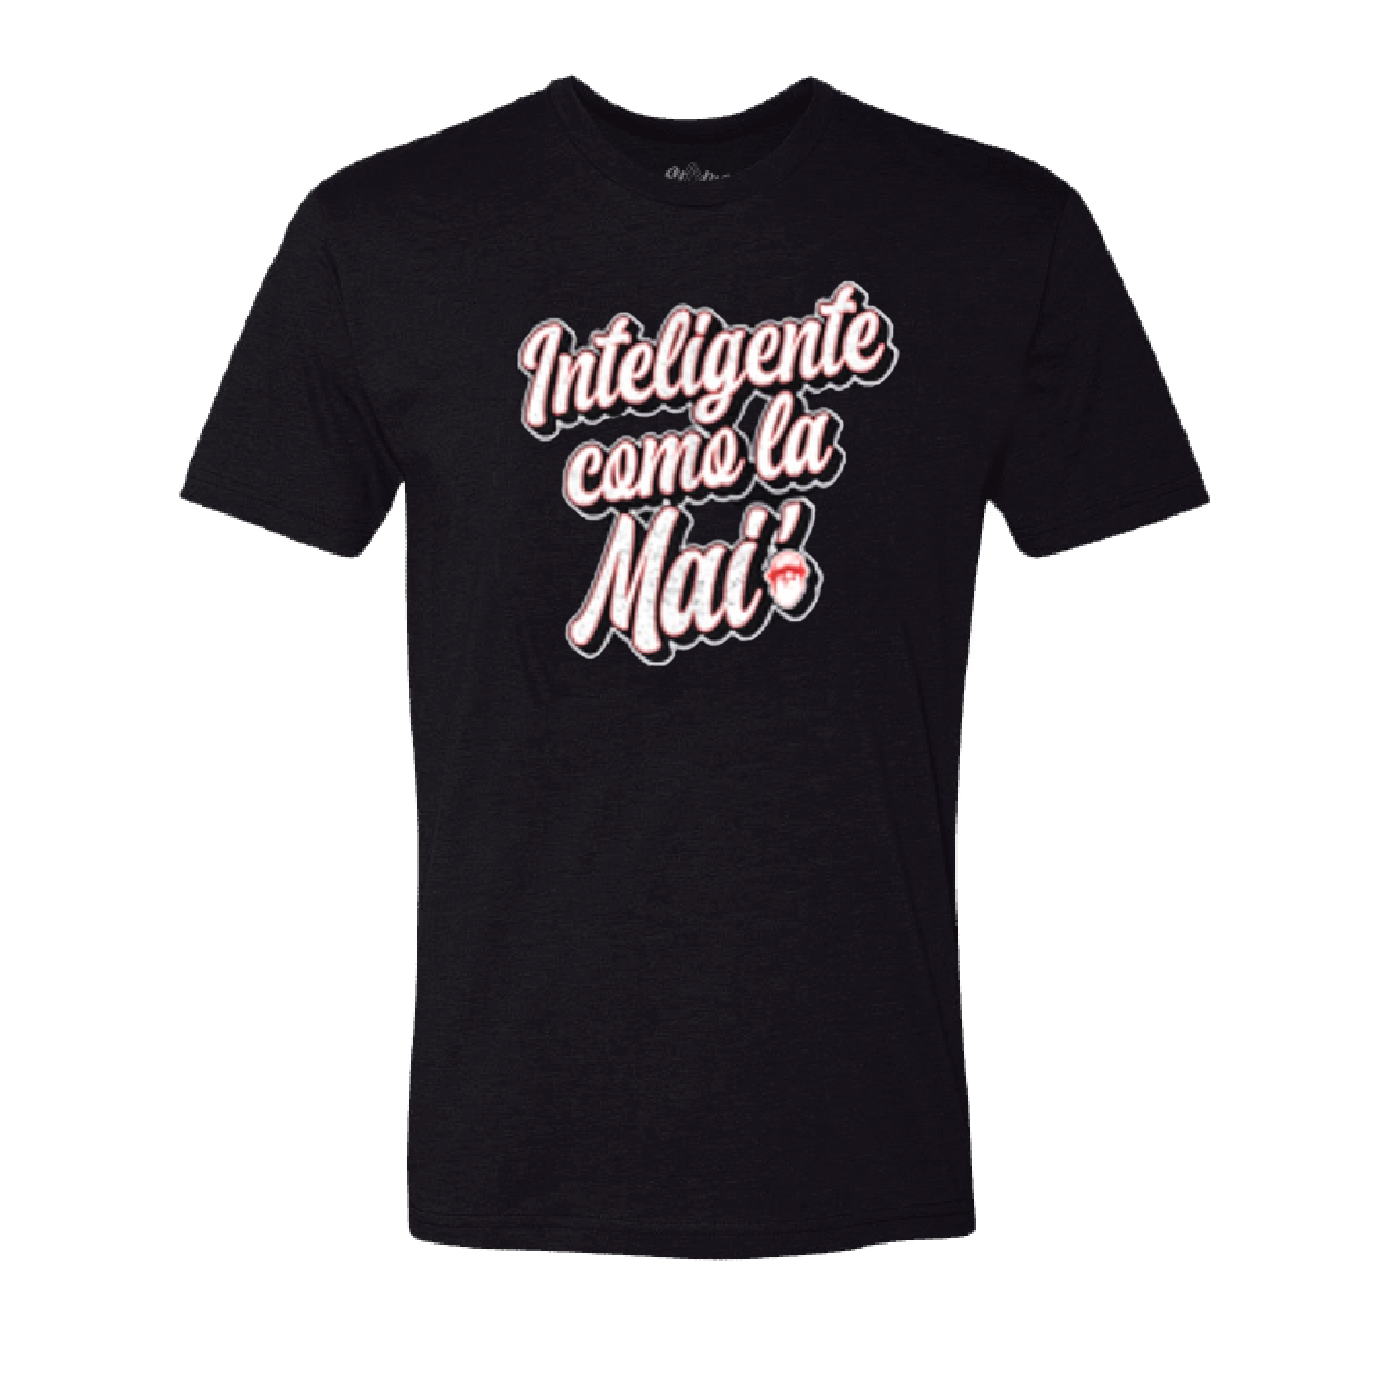 "Inteligente Como La Mai” T-Shirt